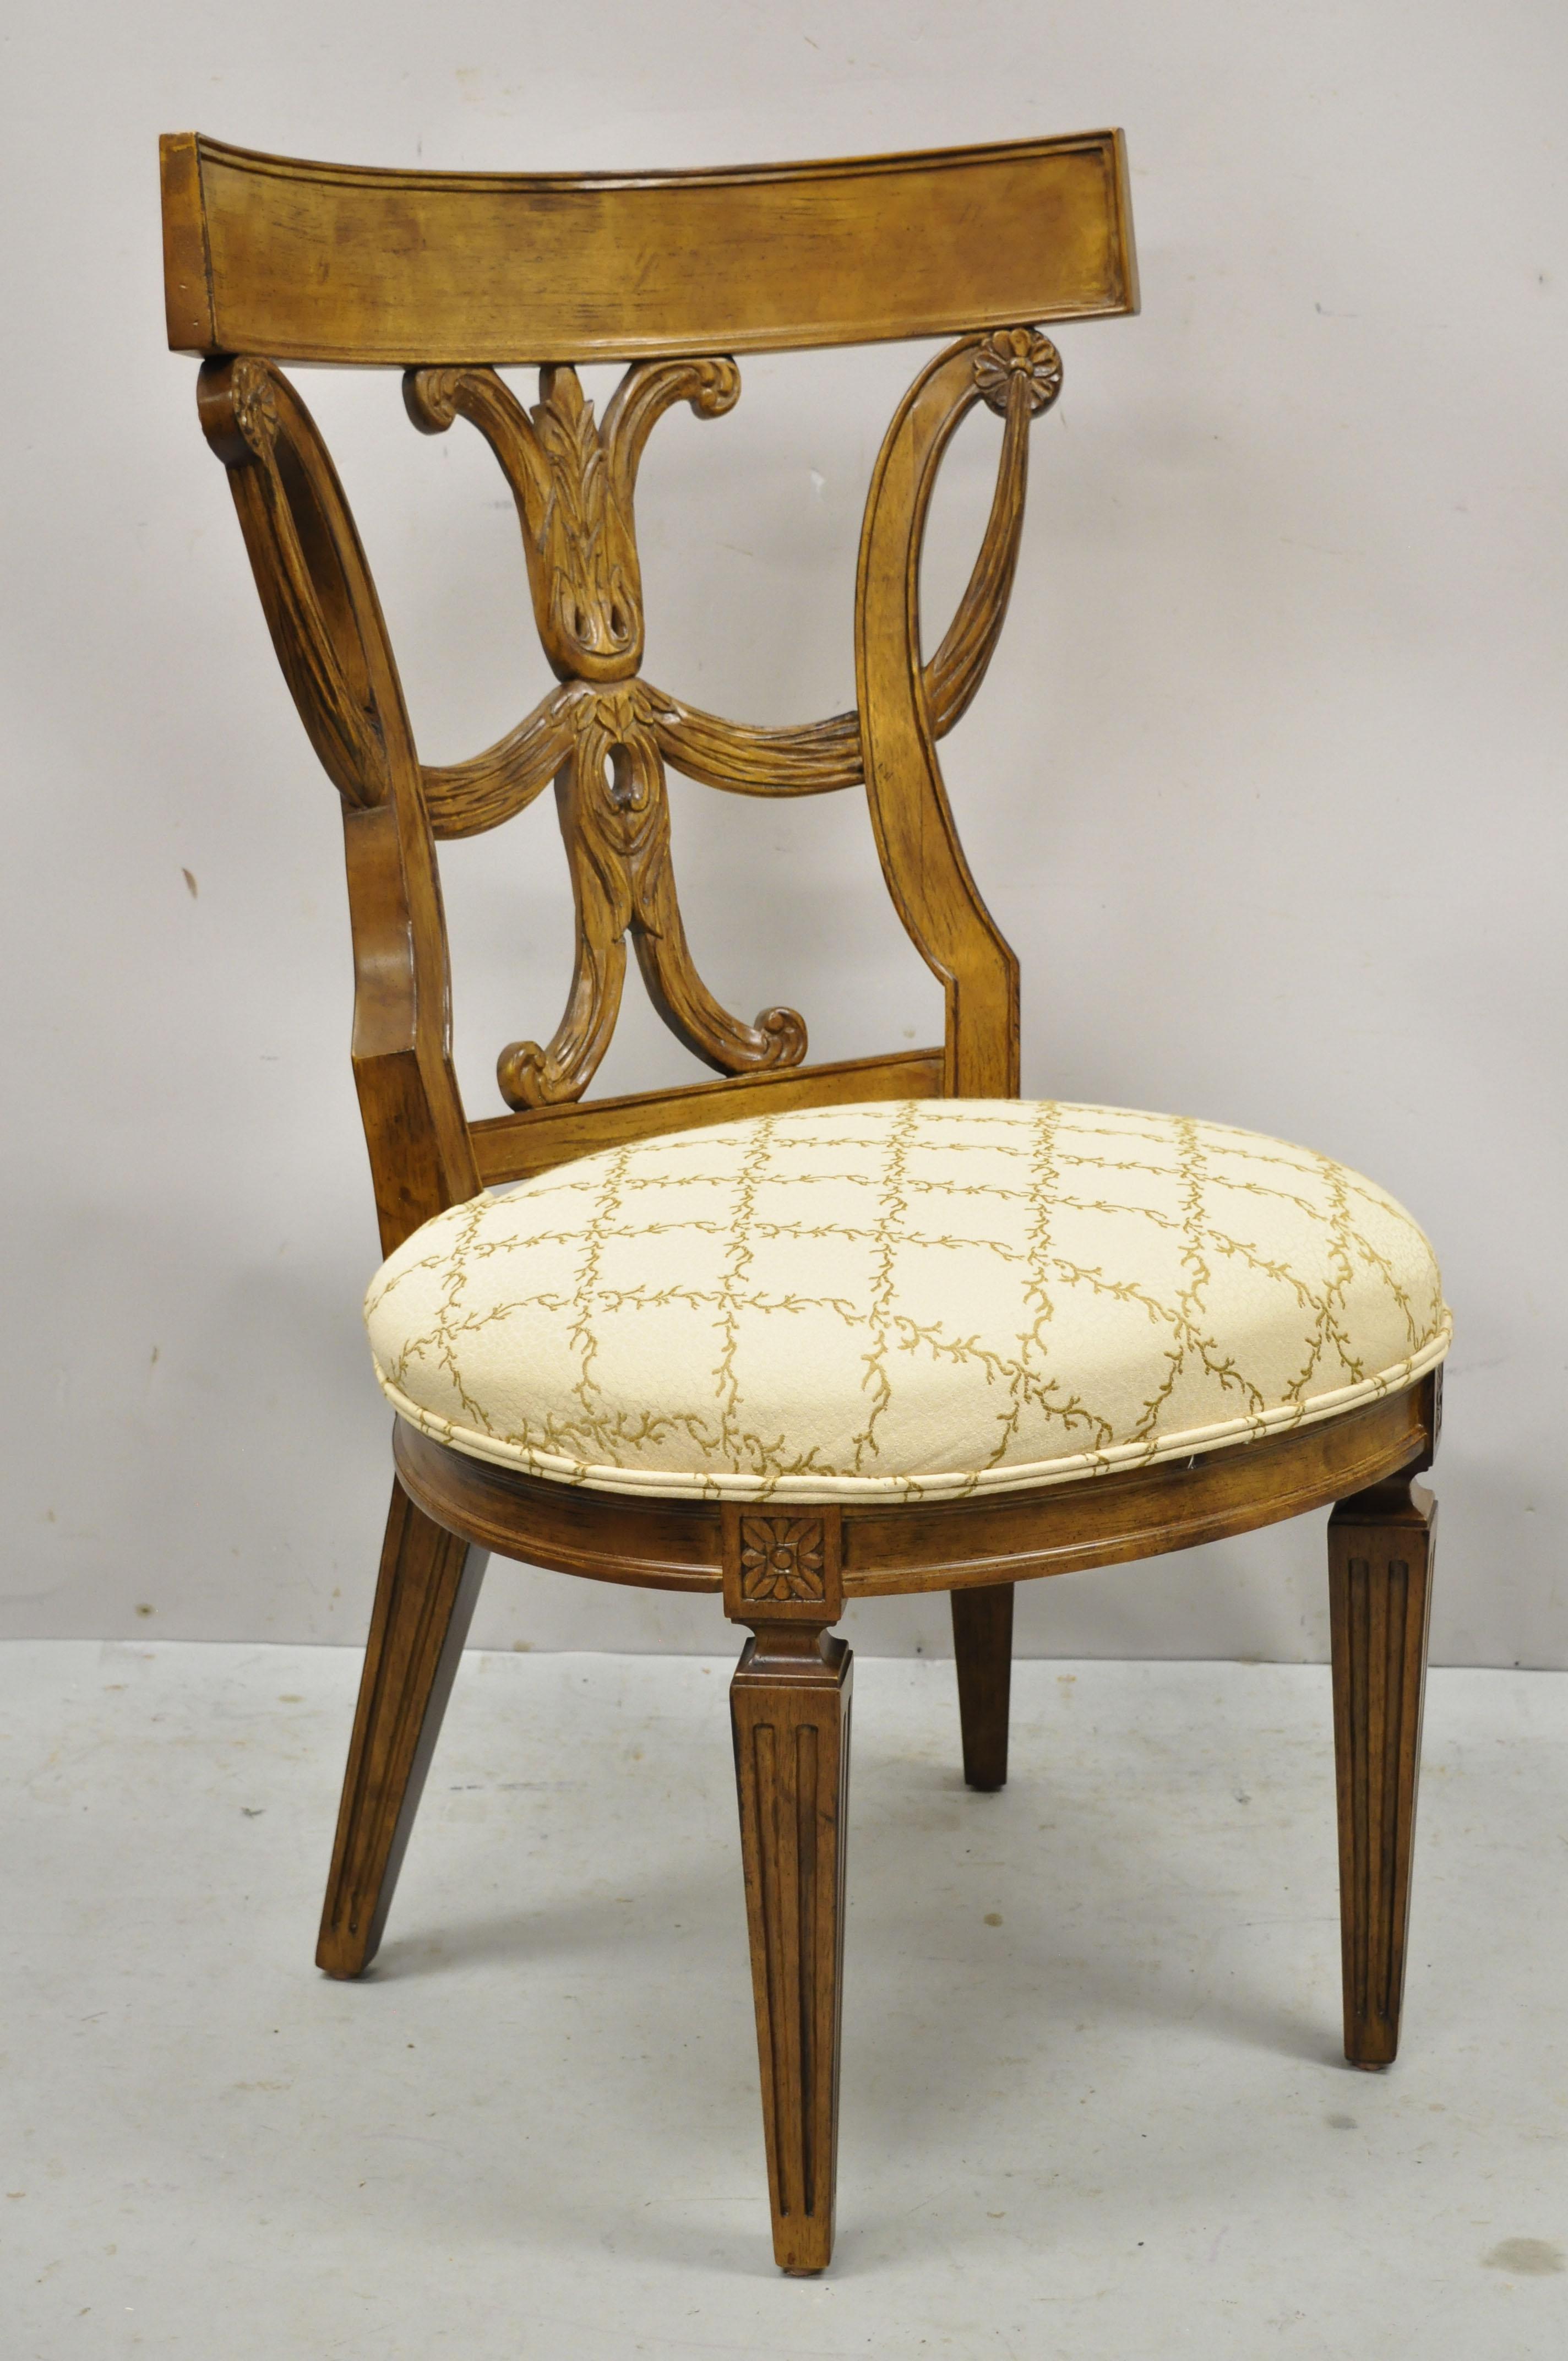 Contemporary Century Furniture Italian Mediterranean Wood Dining Chairs 621-521, Set of 6